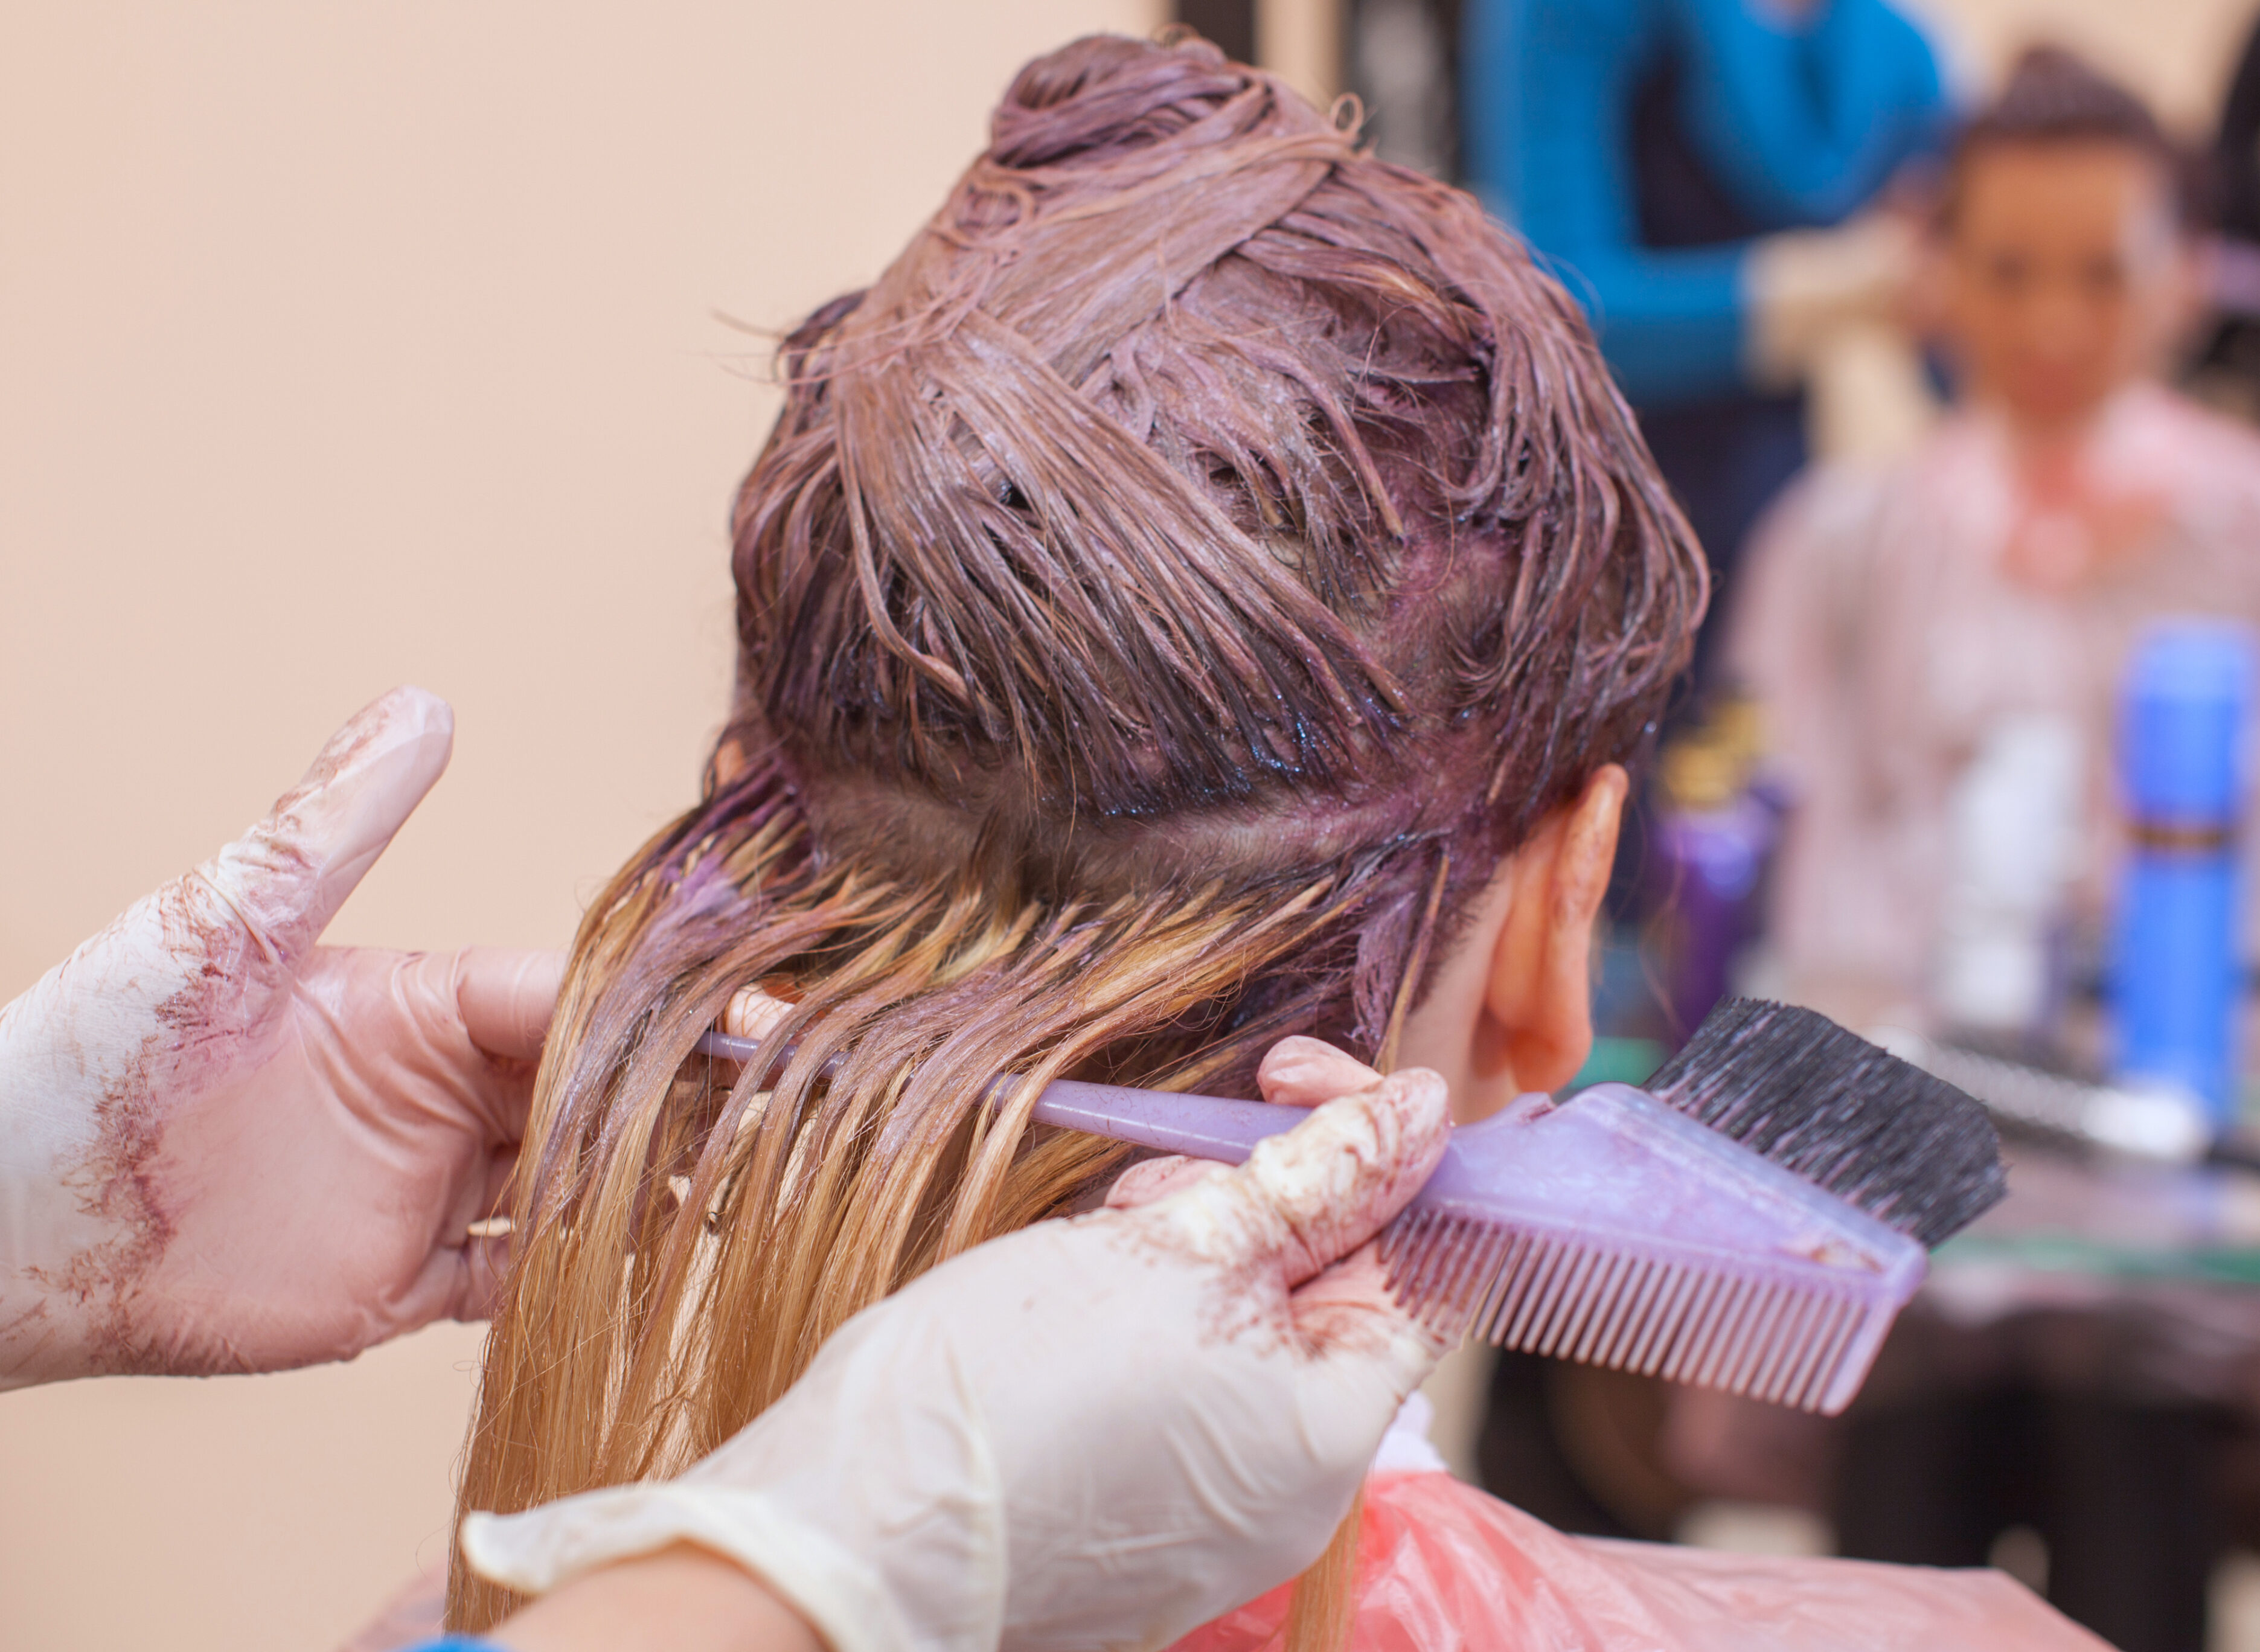 How long does permanent hair dye last?